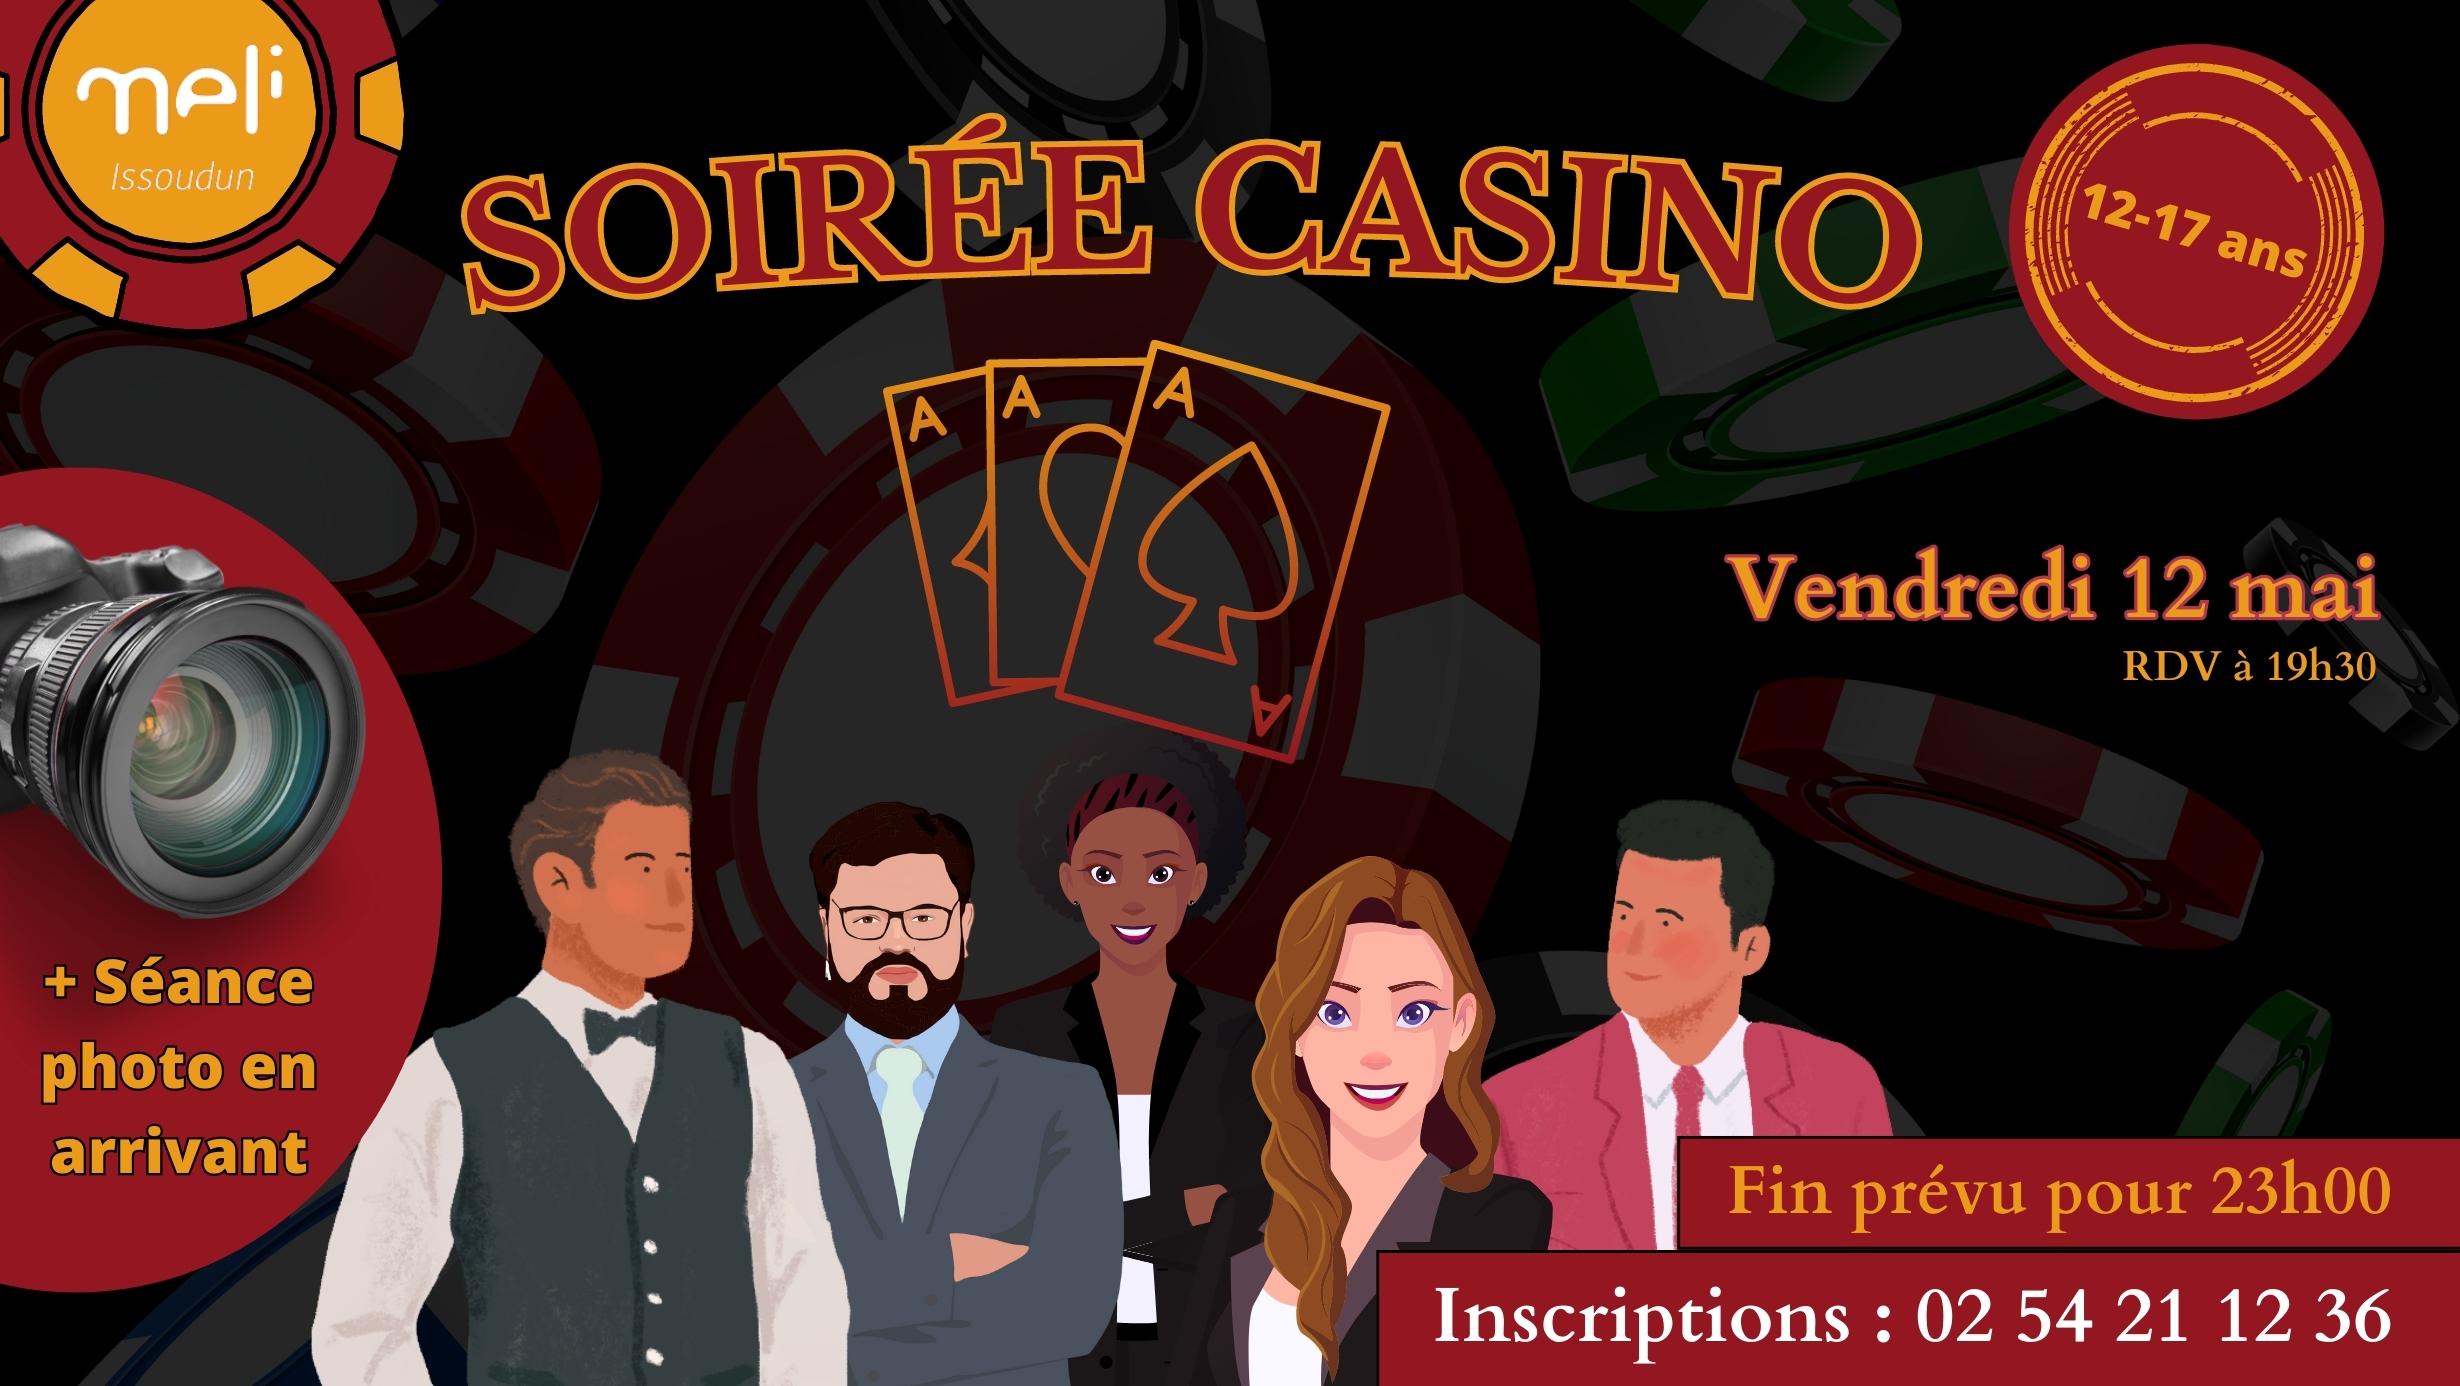 SPECIAL 12-17 ANS : Soirée Casino